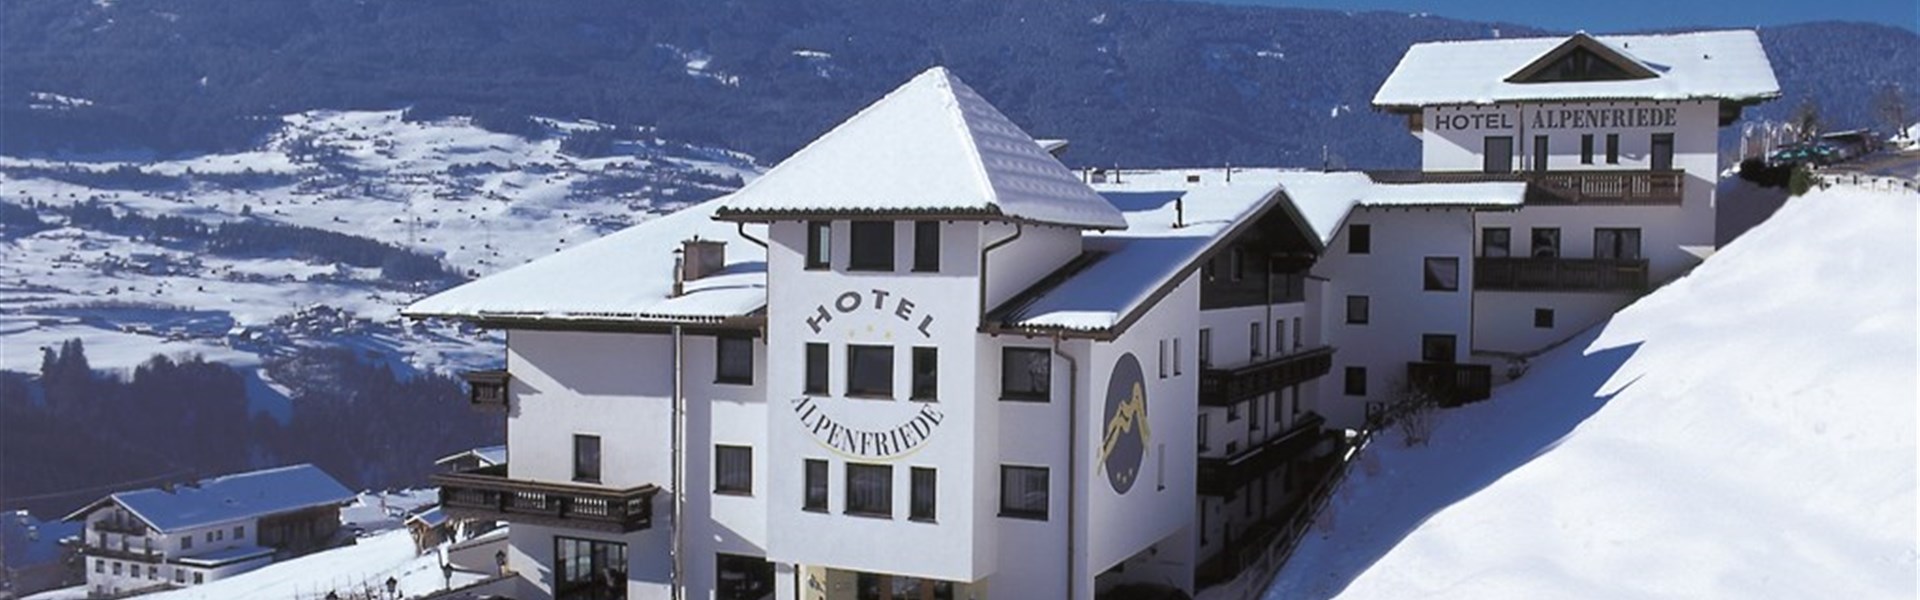 Marco Polo - Hotel Alpenfriede (W) - 